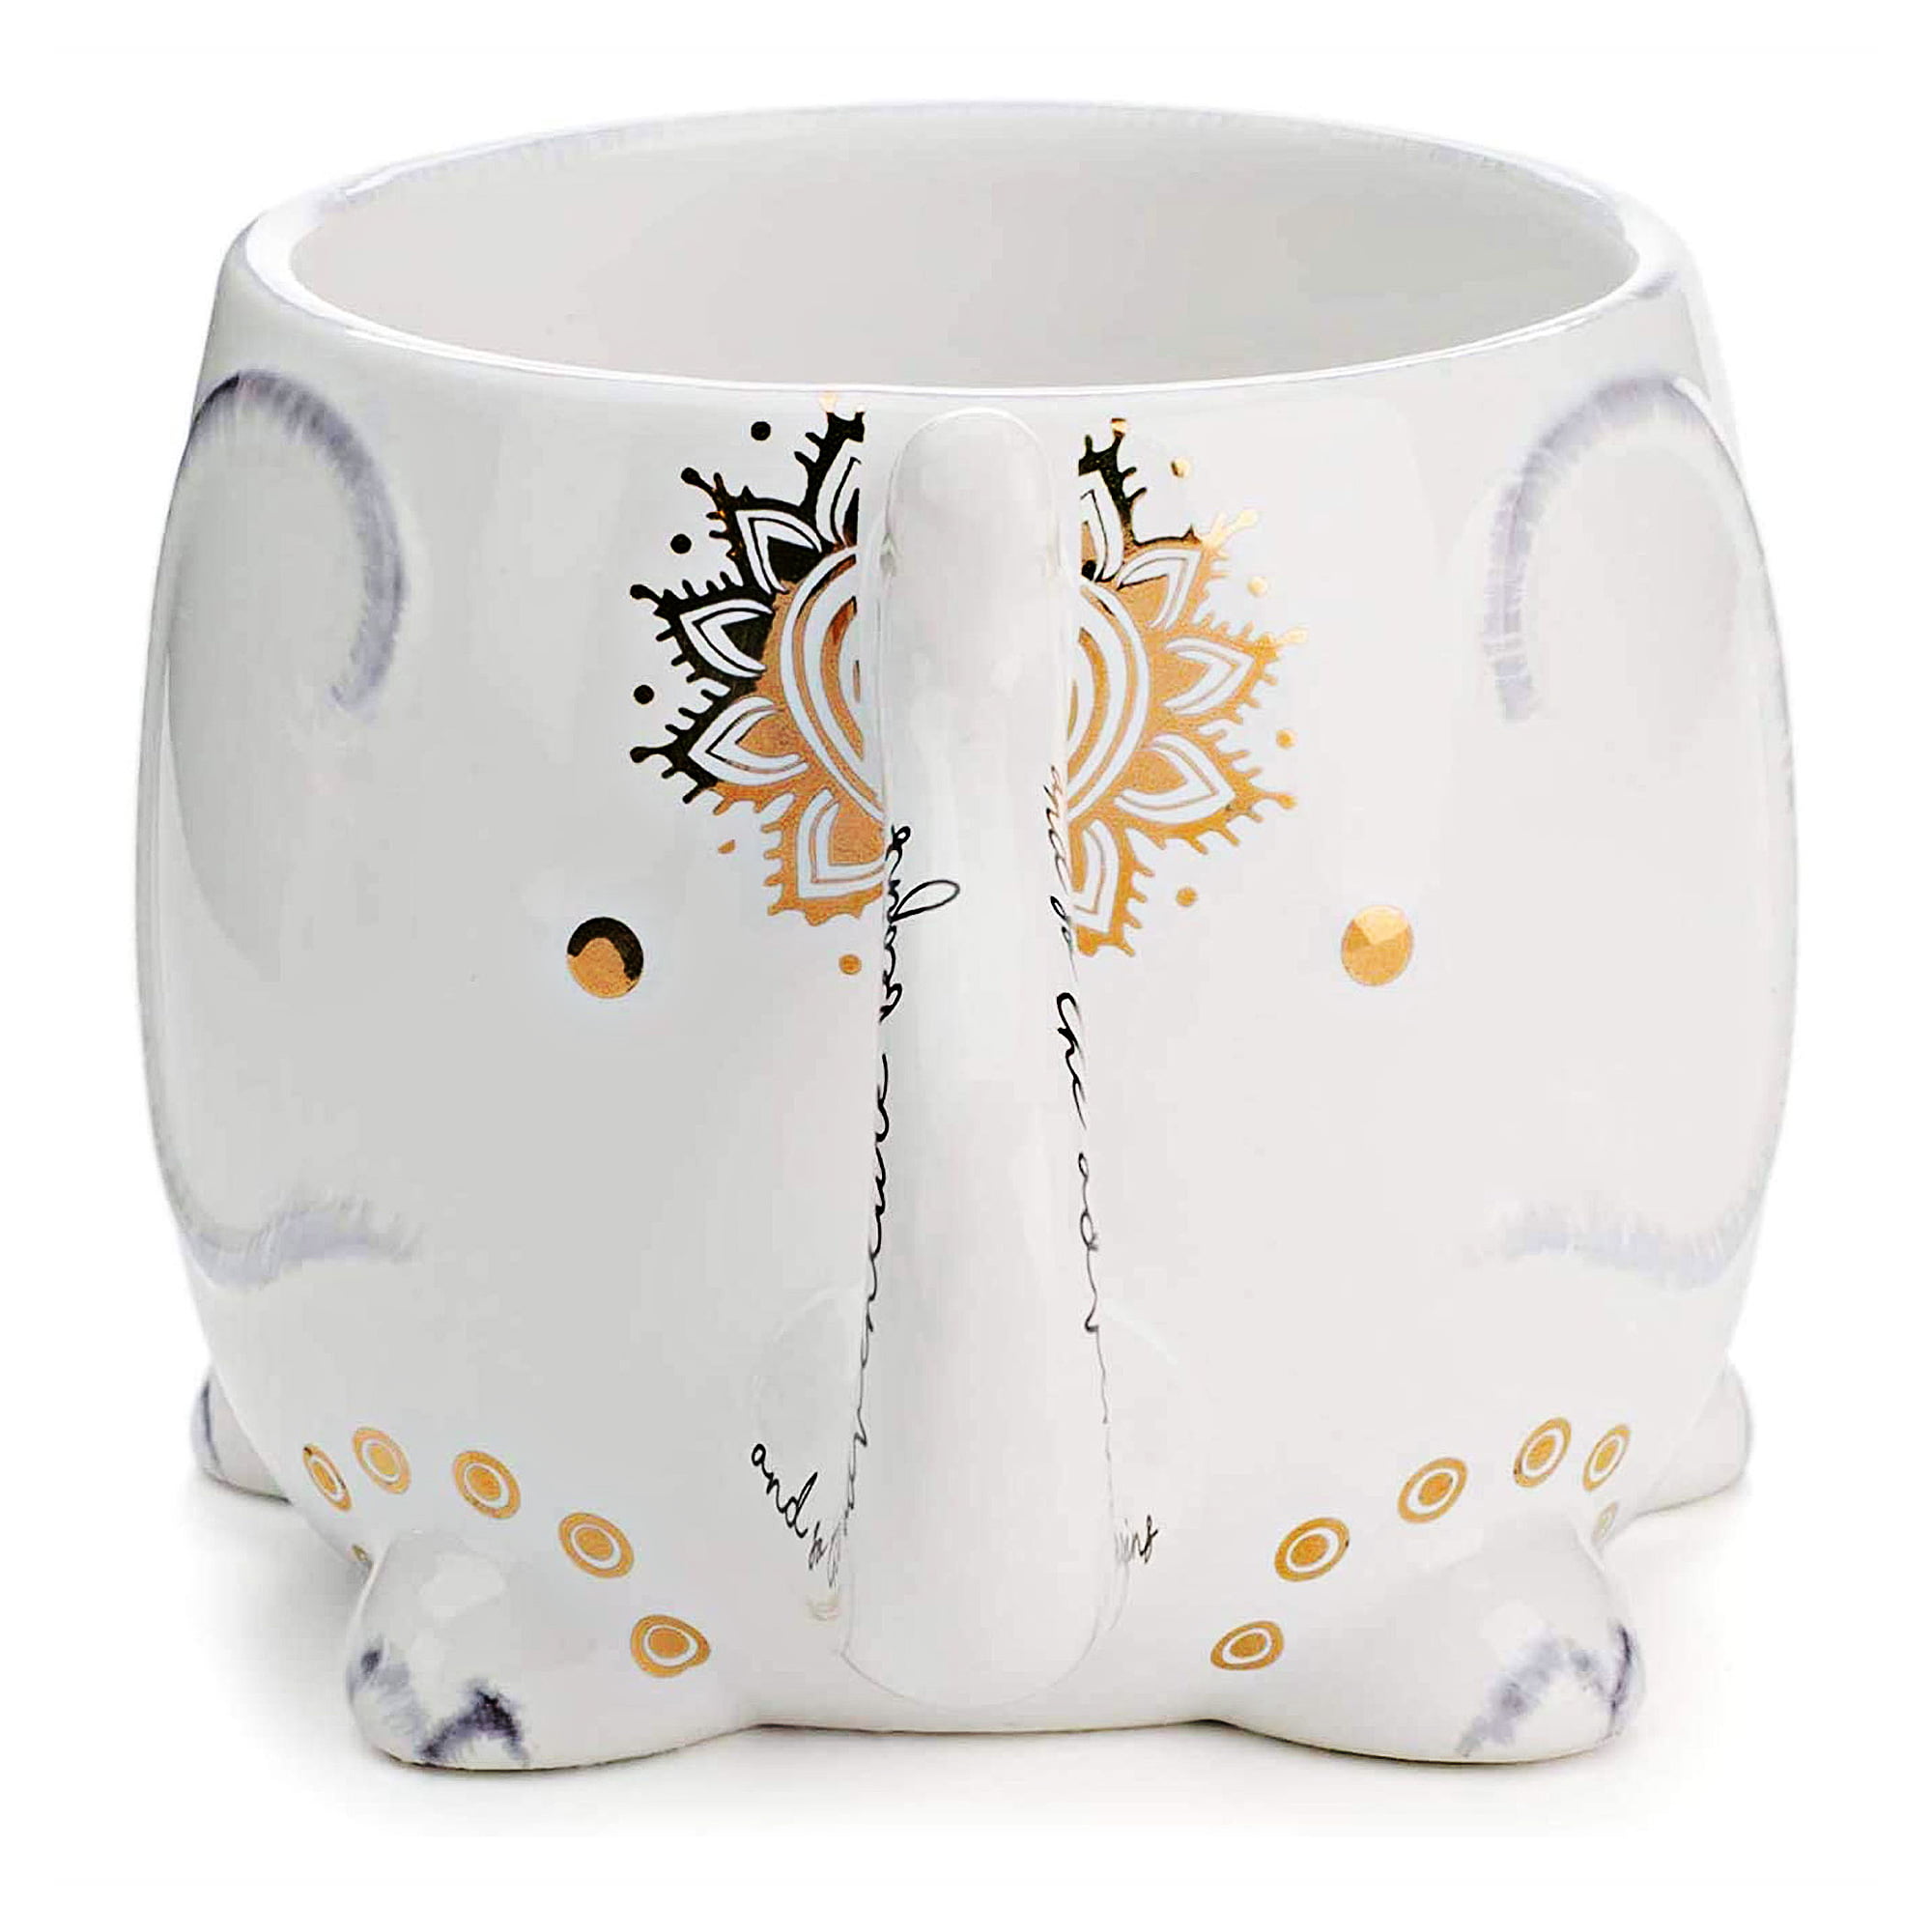 560ml Large Ceramic Coffee Mug Animals Travel Cup with Lid Elephant  Handmade Milk Tea Mug Christmas